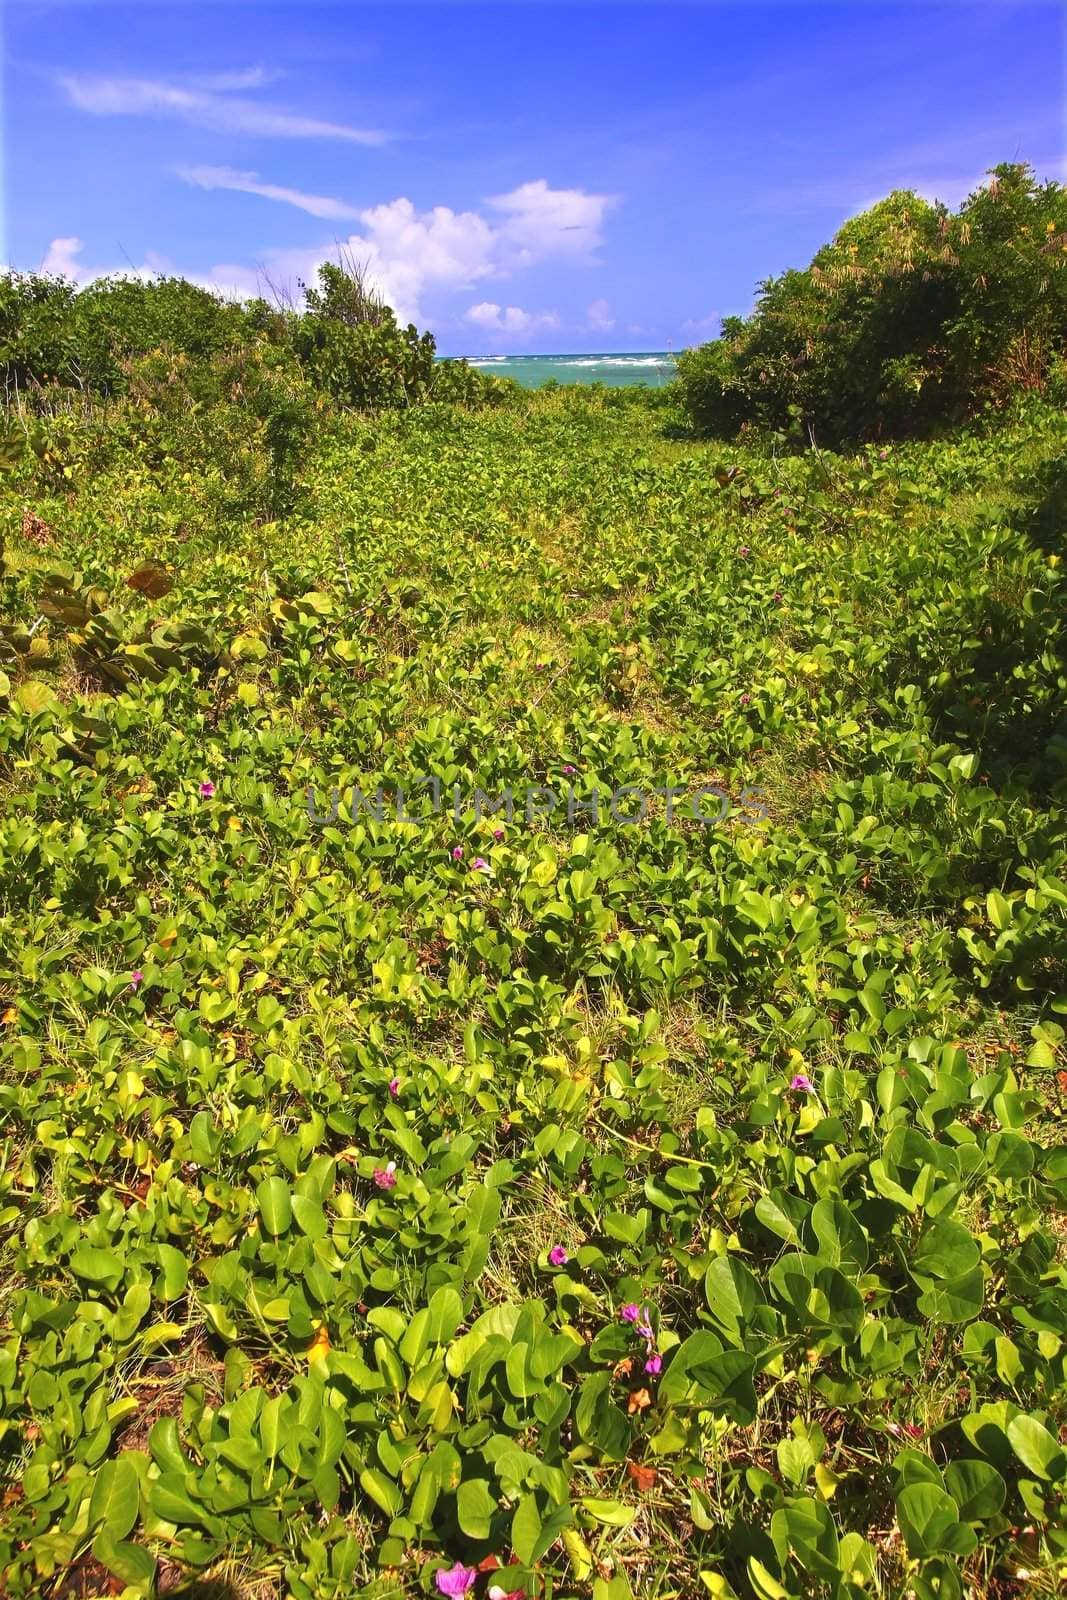 Tropical vegetation grows along the coast at Anse de Sables Beach in Saint Lucia.